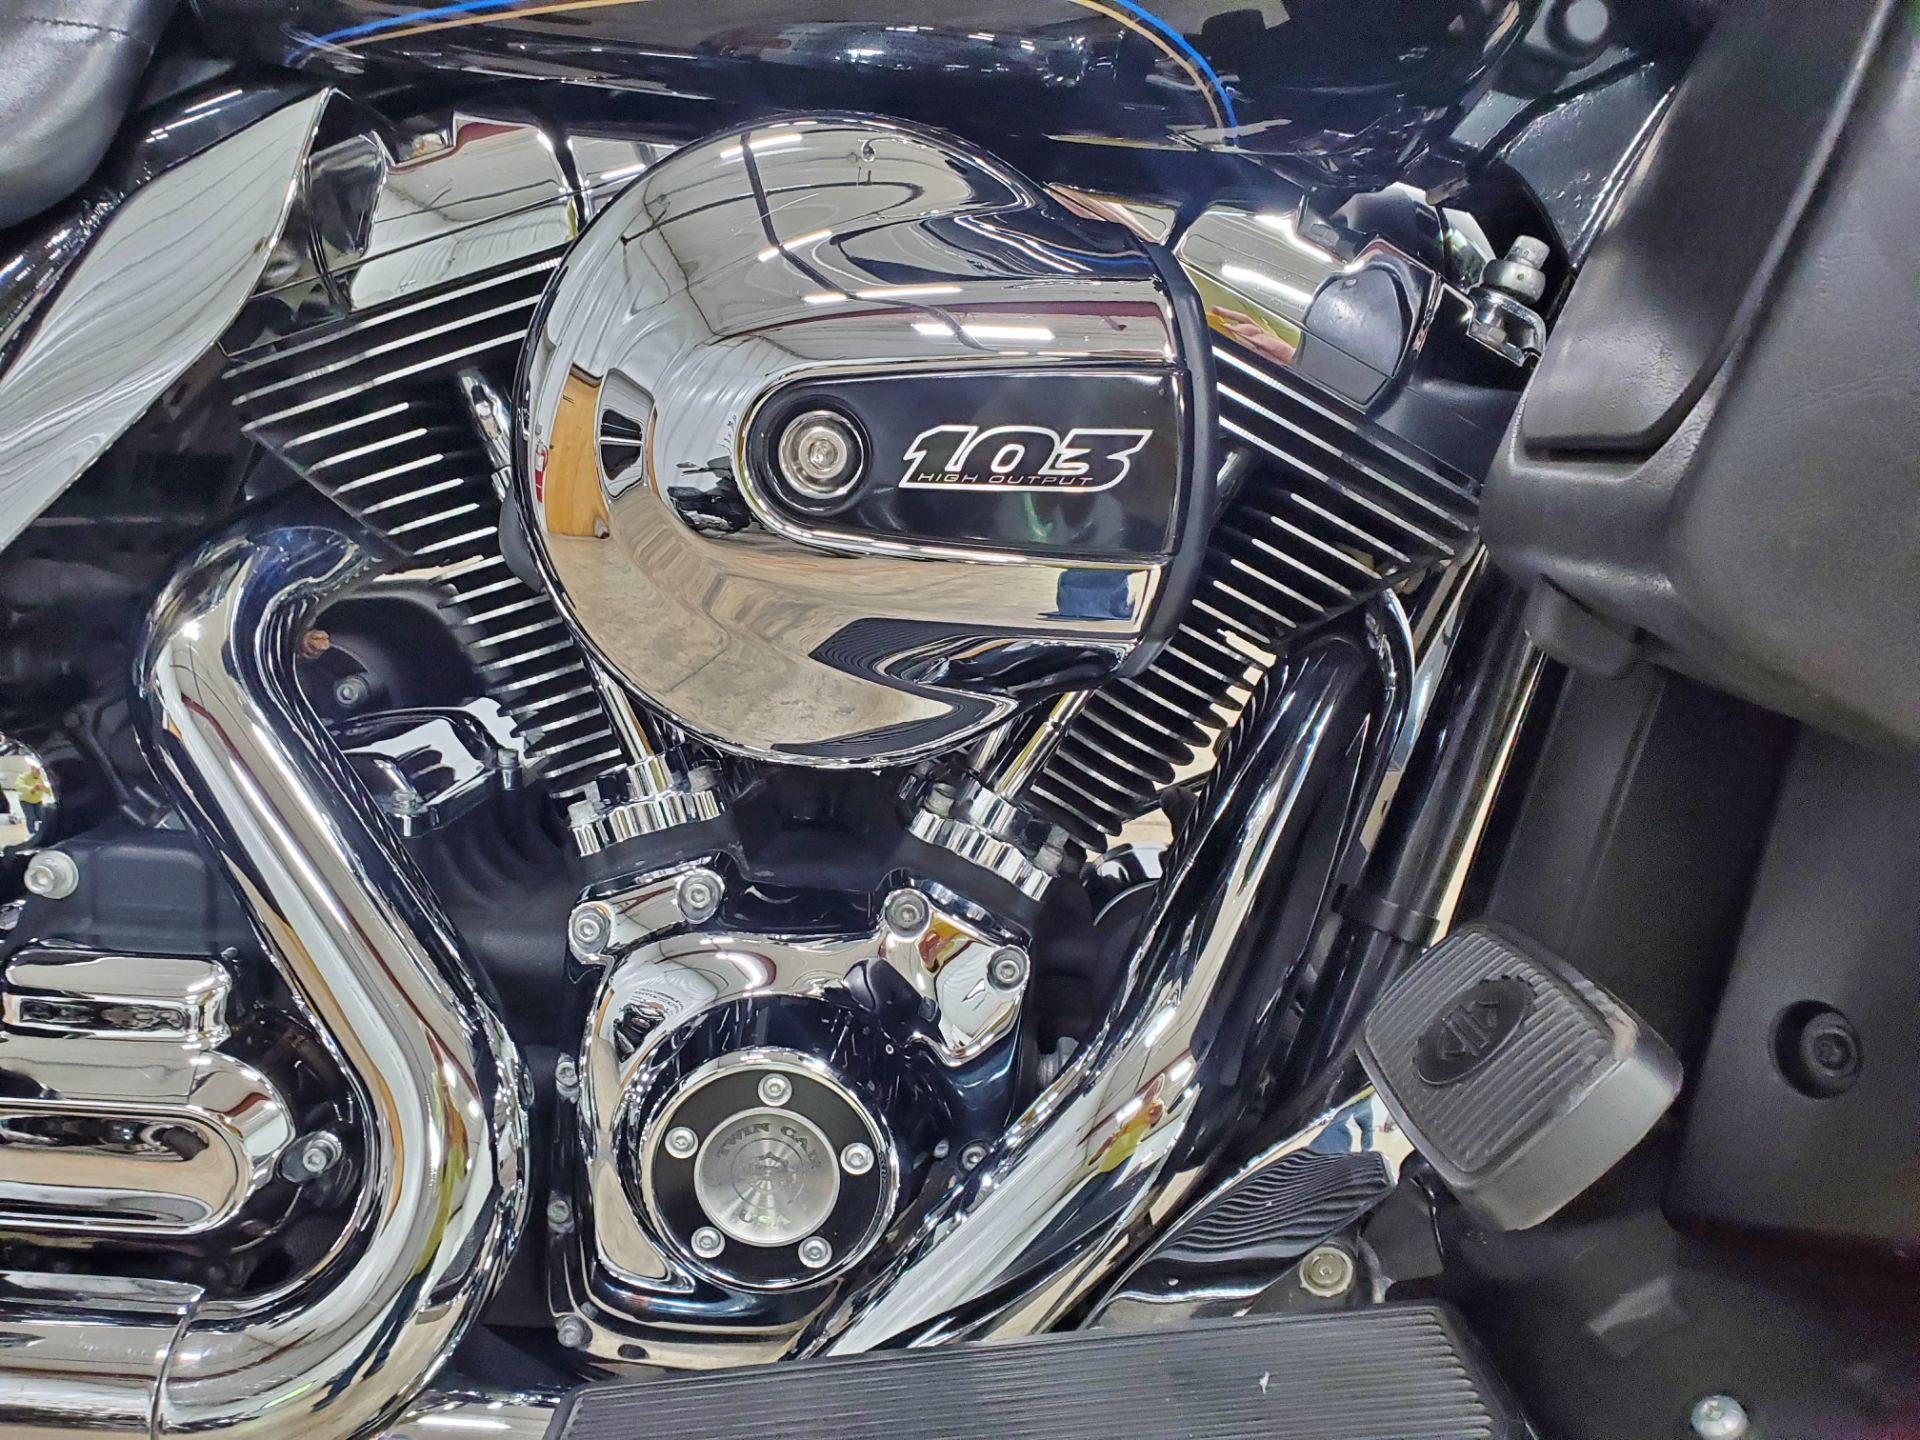 2014 Harley-Davidson Electra Glide® Ultra Classic® in Sandusky, Ohio - Photo 2